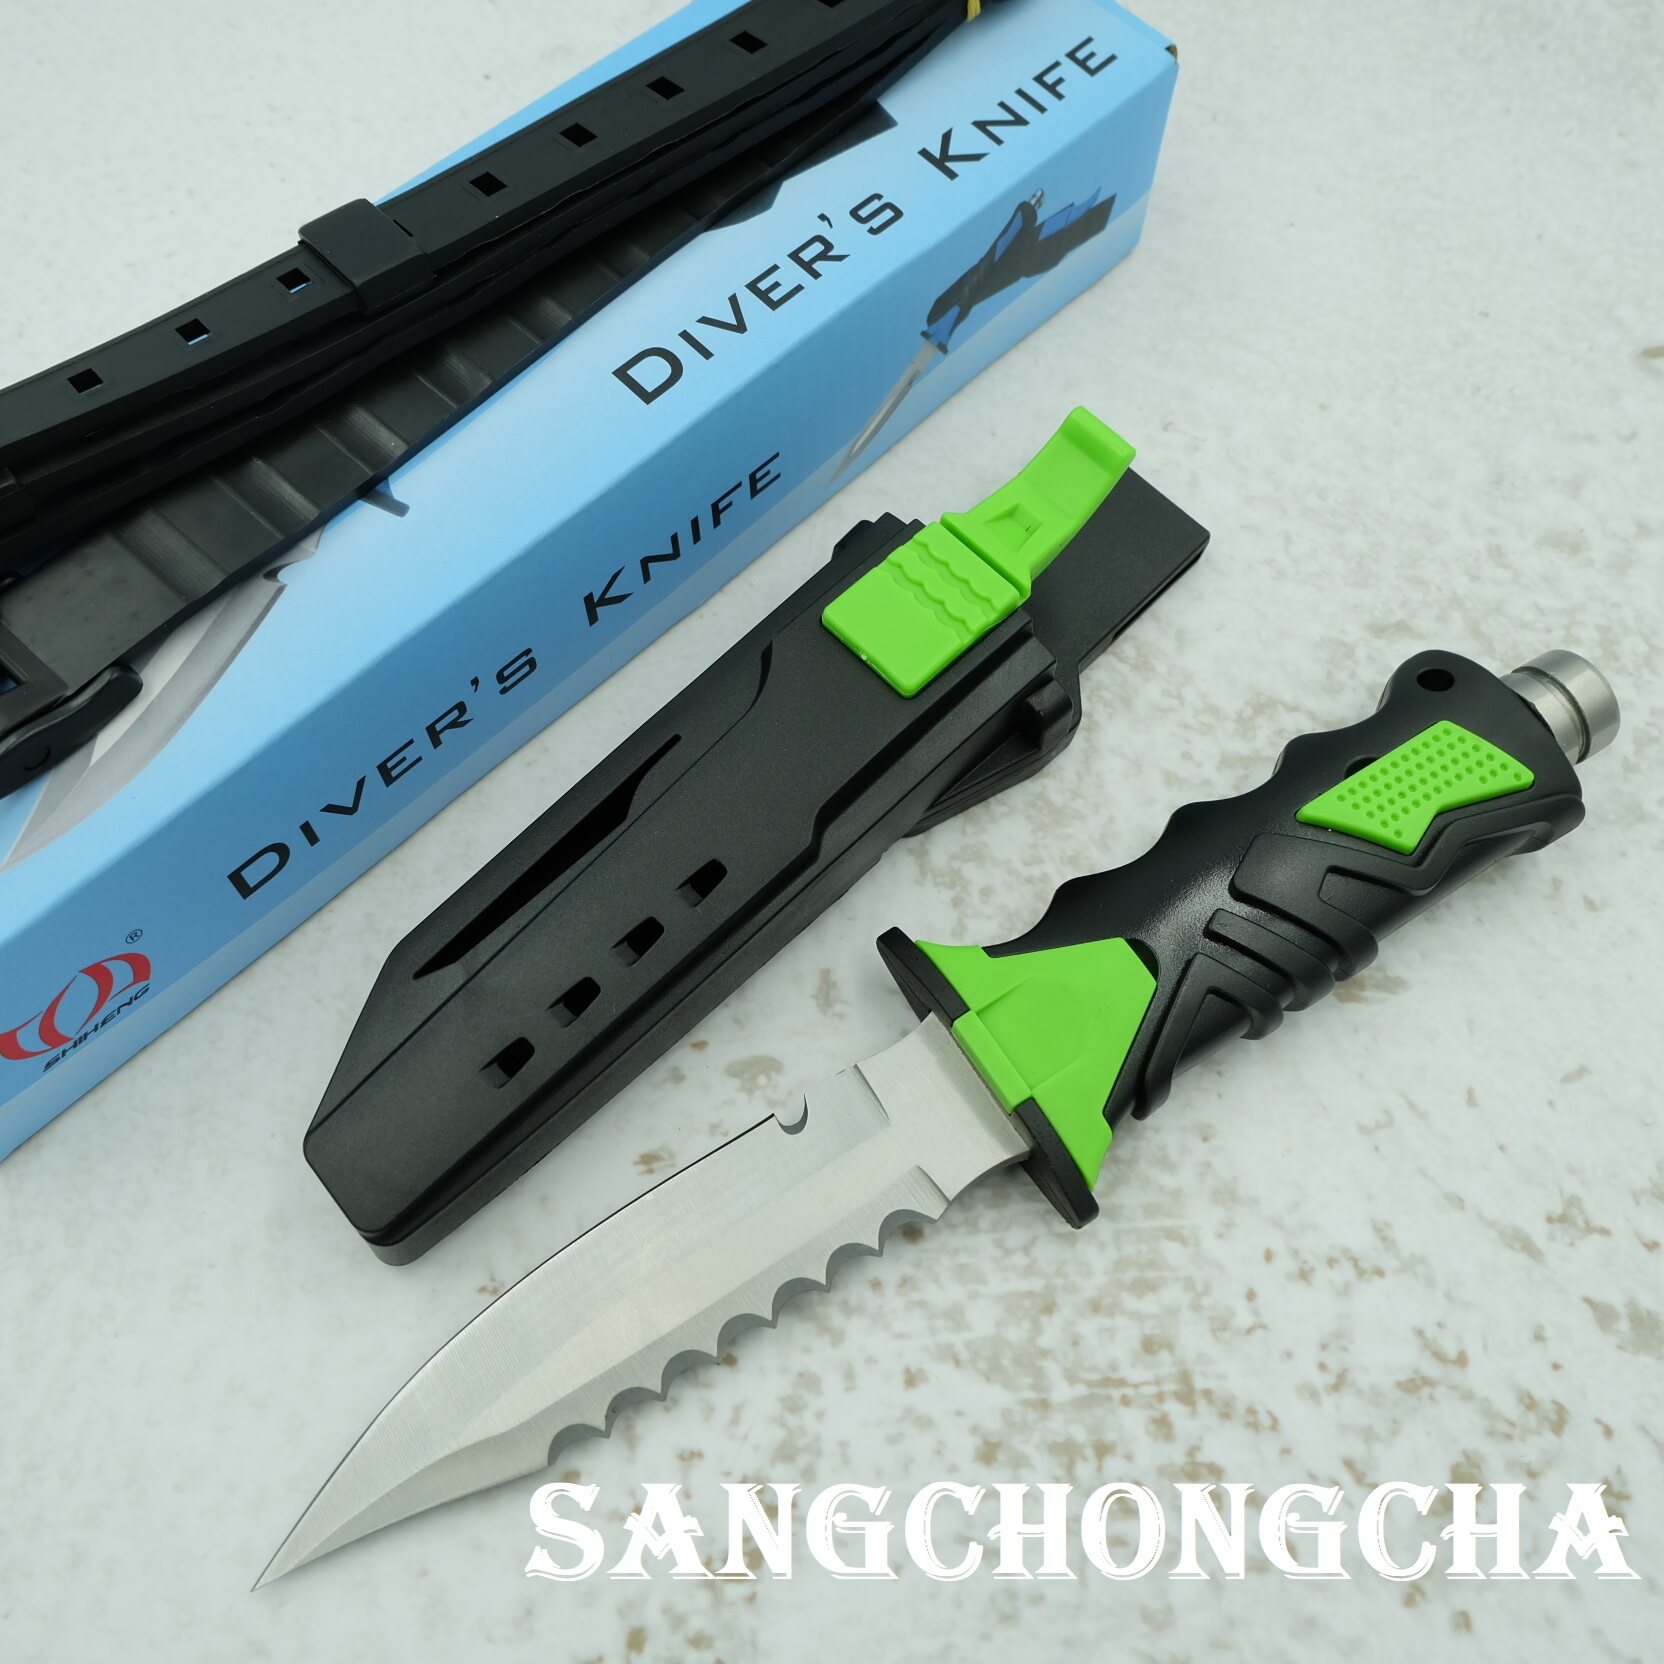 Sangchongcha Diving knife for Diver มีดดำน้ำ มีดดำน้ำลึก มีดเดินป่า มีดใบตาย ใบมีดสแตนเลสสตีล 420J2 ทนสนิม ยาว25.5ซม. ปลายโค้งคม ฟันเลื่อย แถมปลอกพลาสติกABSและที่รัดขาอย่างดี DK01-GREEN and BLUE